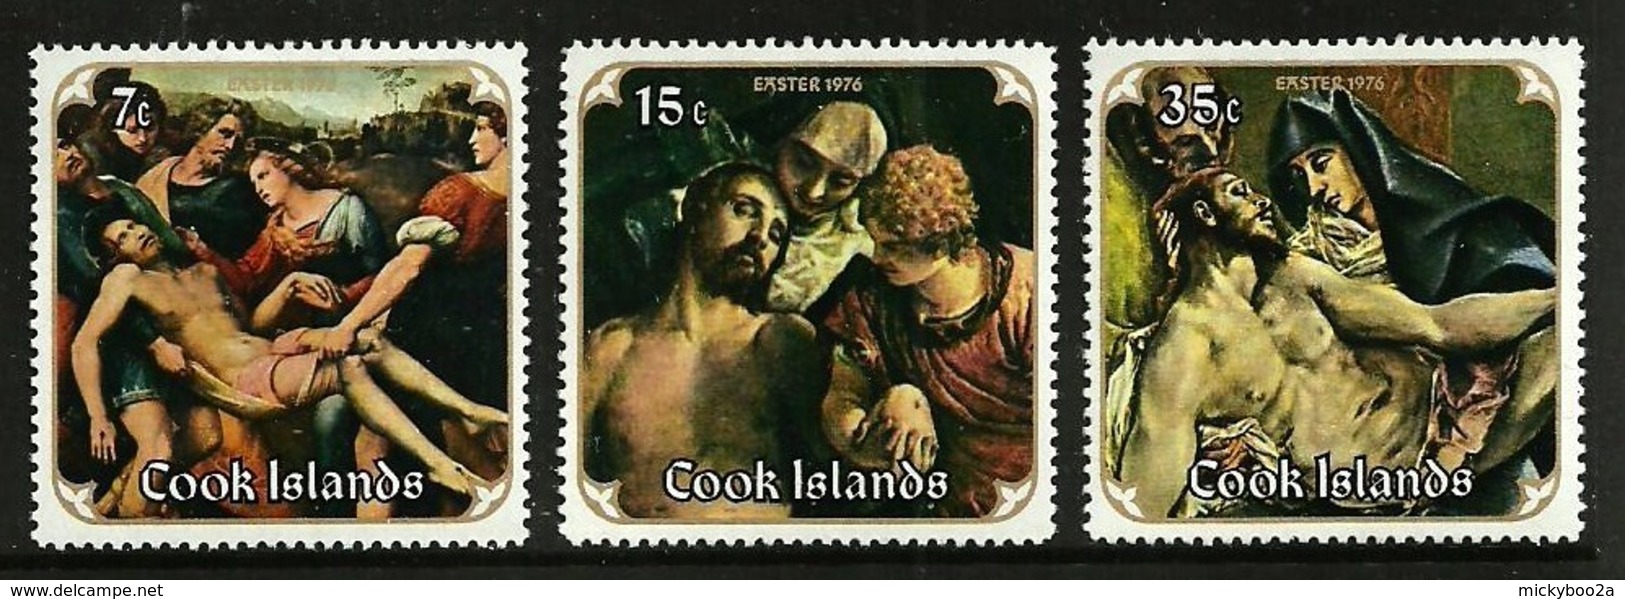 COOK ISLANDS 1976 EASTER ART PAINTINGS SET MNH - Cook Islands